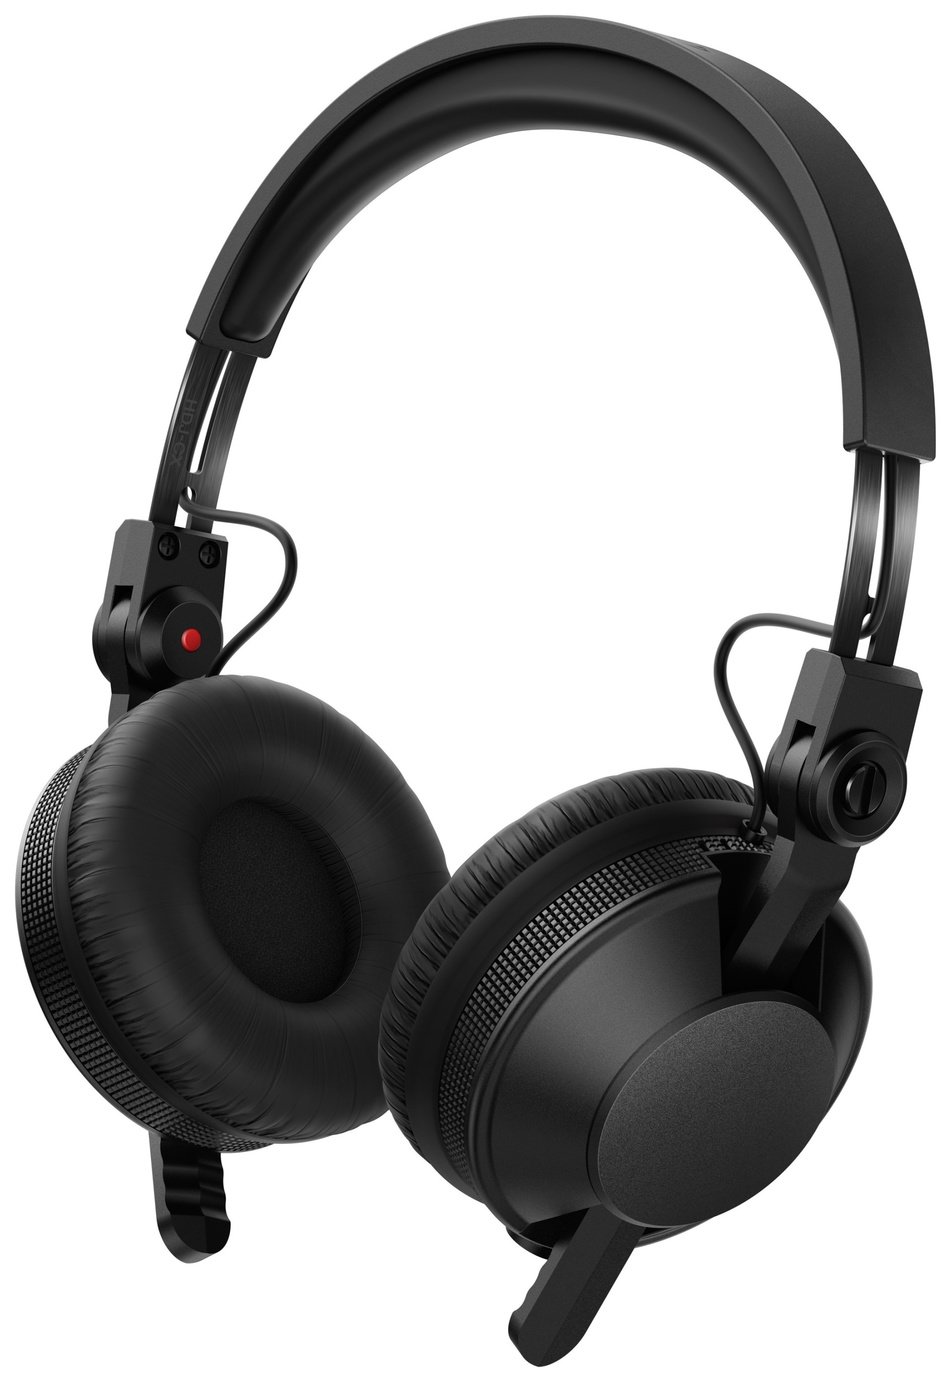 Pioneer DJ HDJ-CX DJ On-Ear Wired Headphones - Black